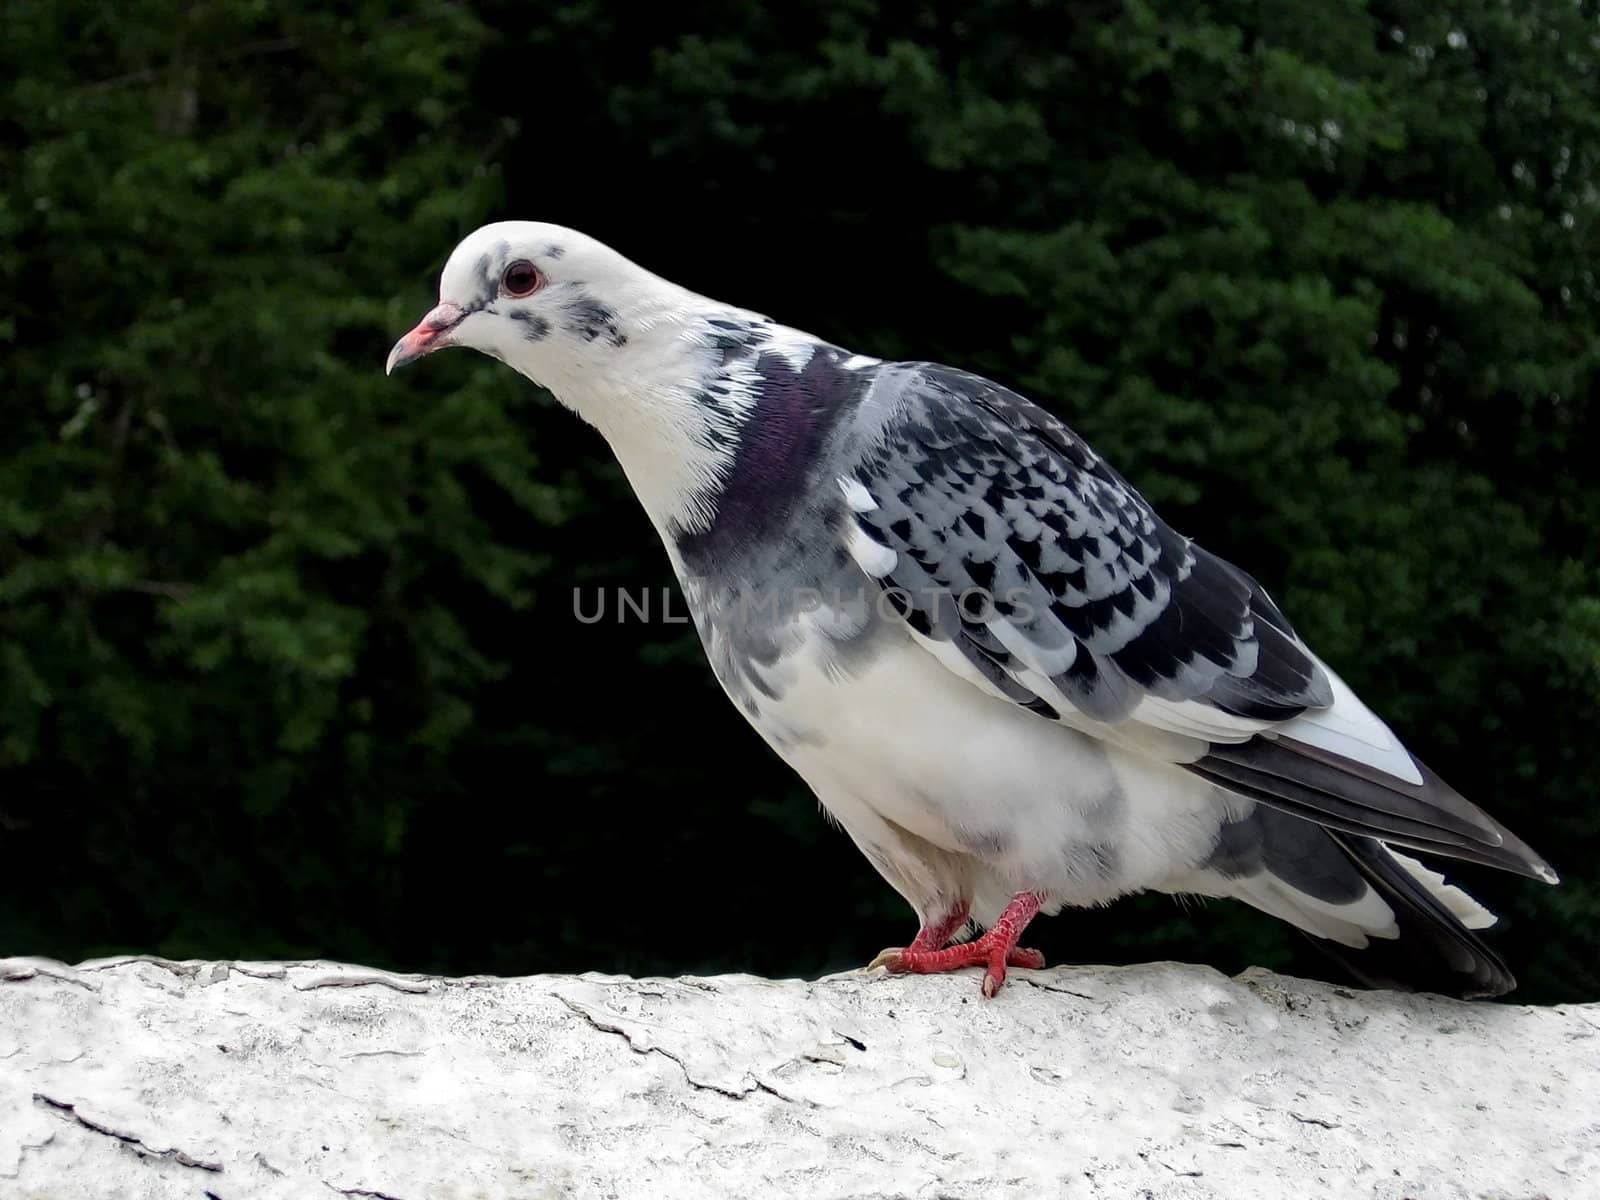 Motley white pigeon by tomatto